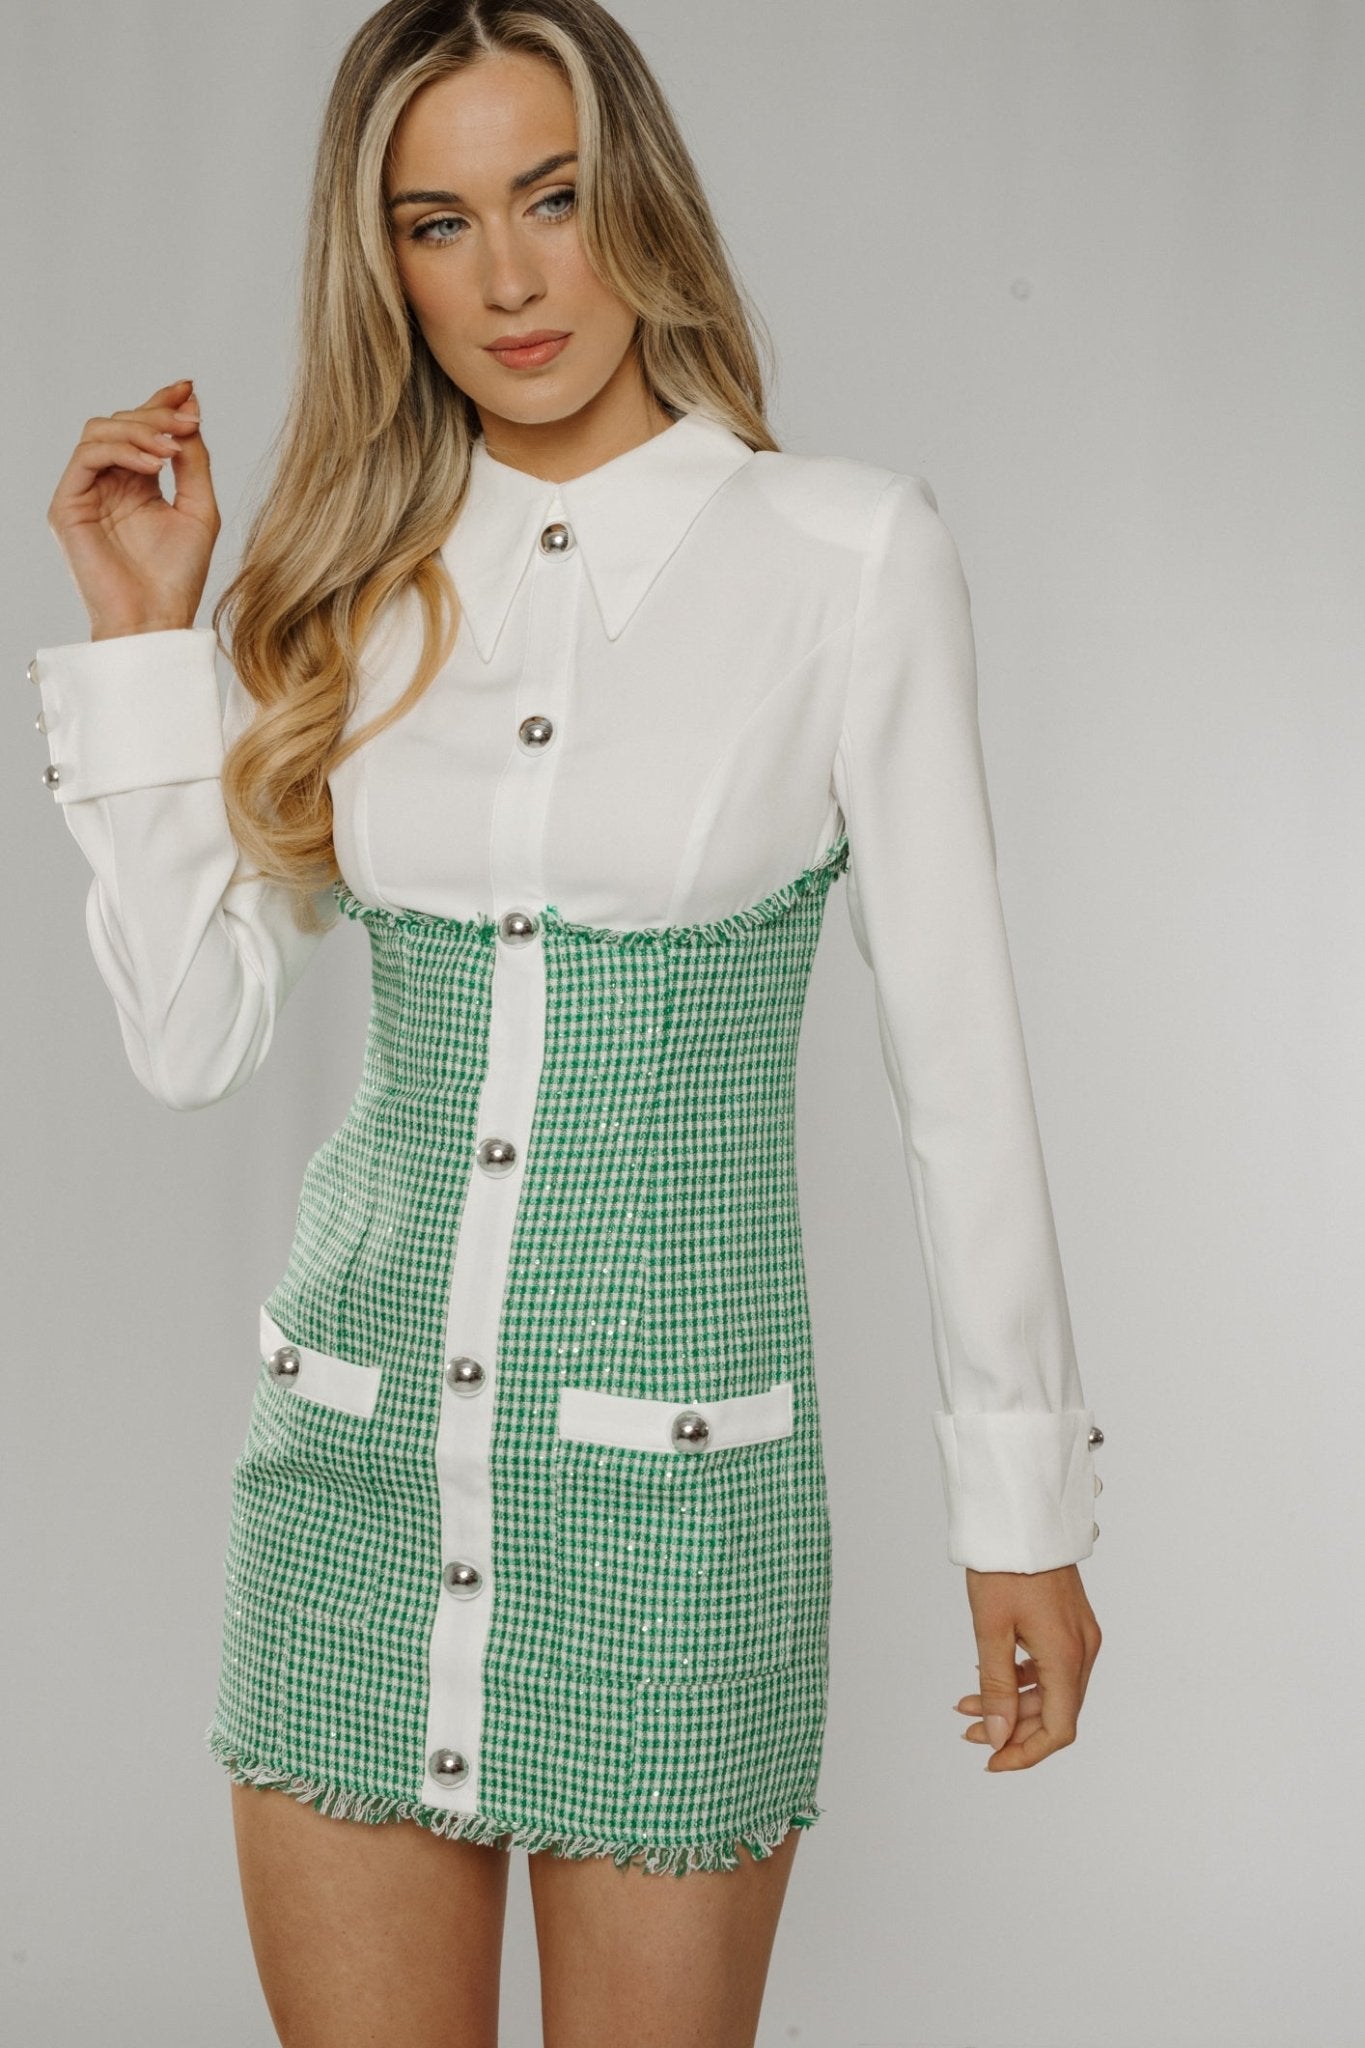 Cara Contrast Dress In White & Green - The Walk in Wardrobe